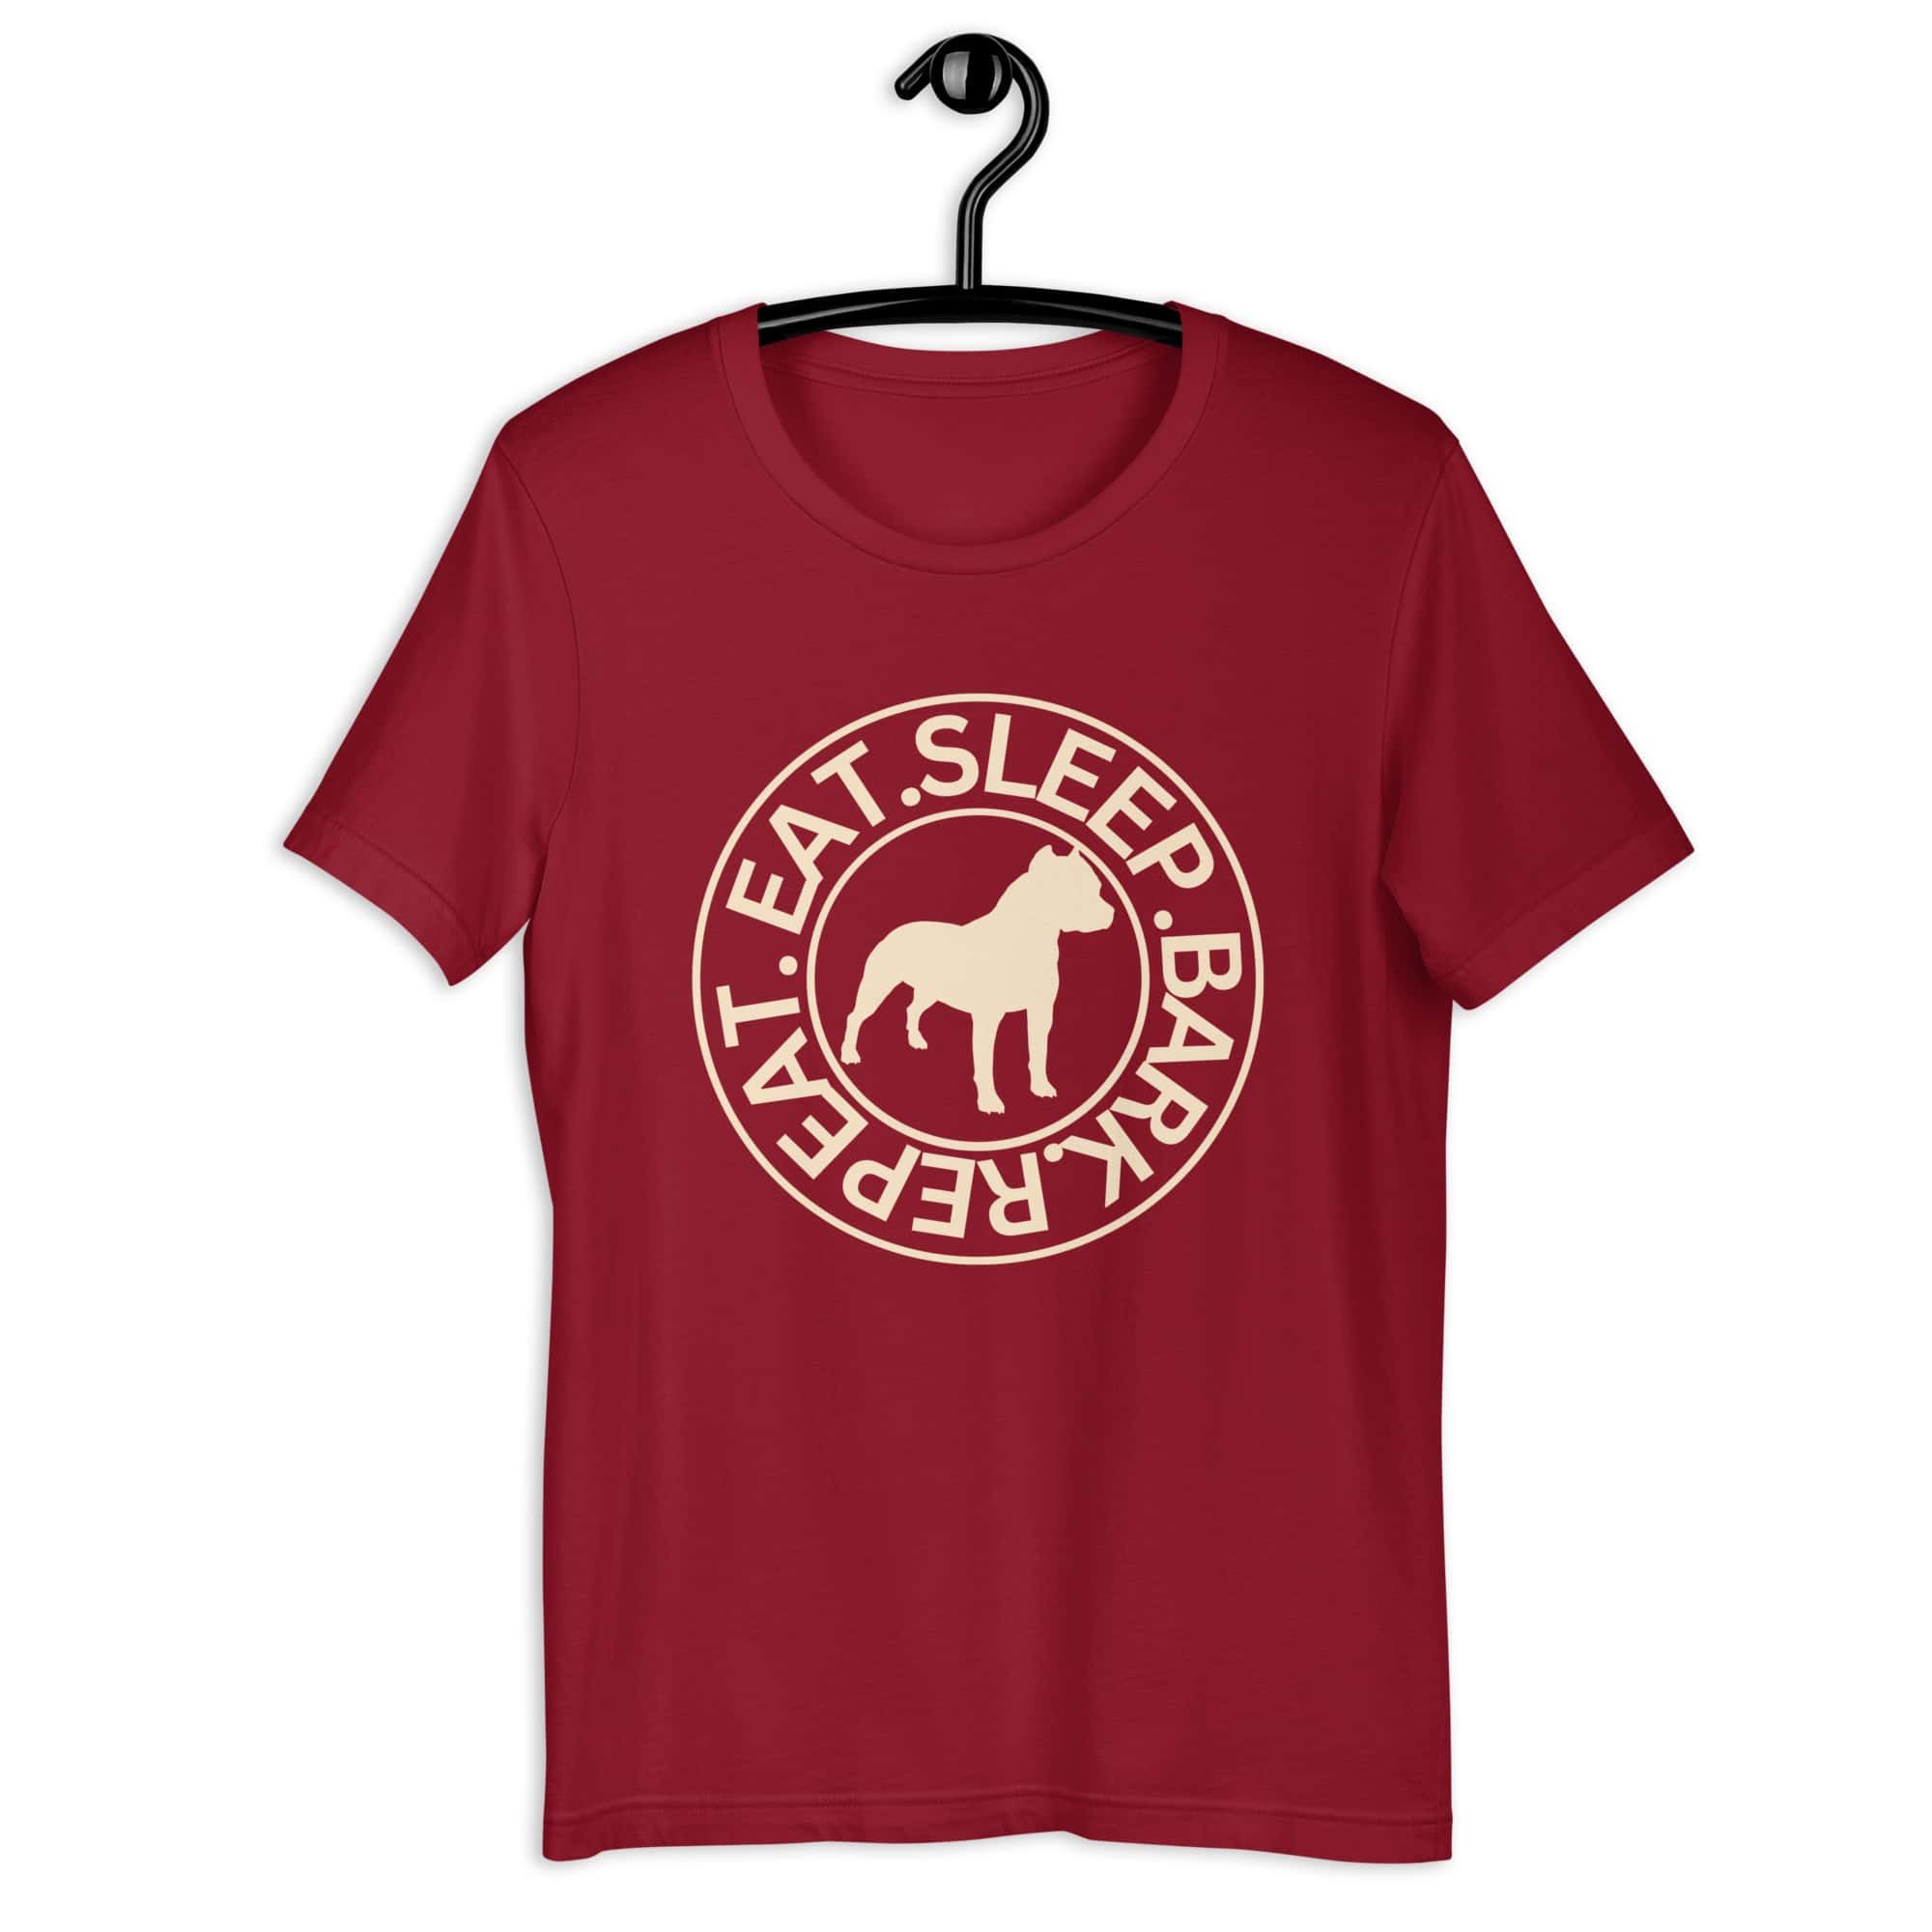 Eat Sleep Bark Repeat Toy Bulldog Unisex T-Shirt. Cardinal